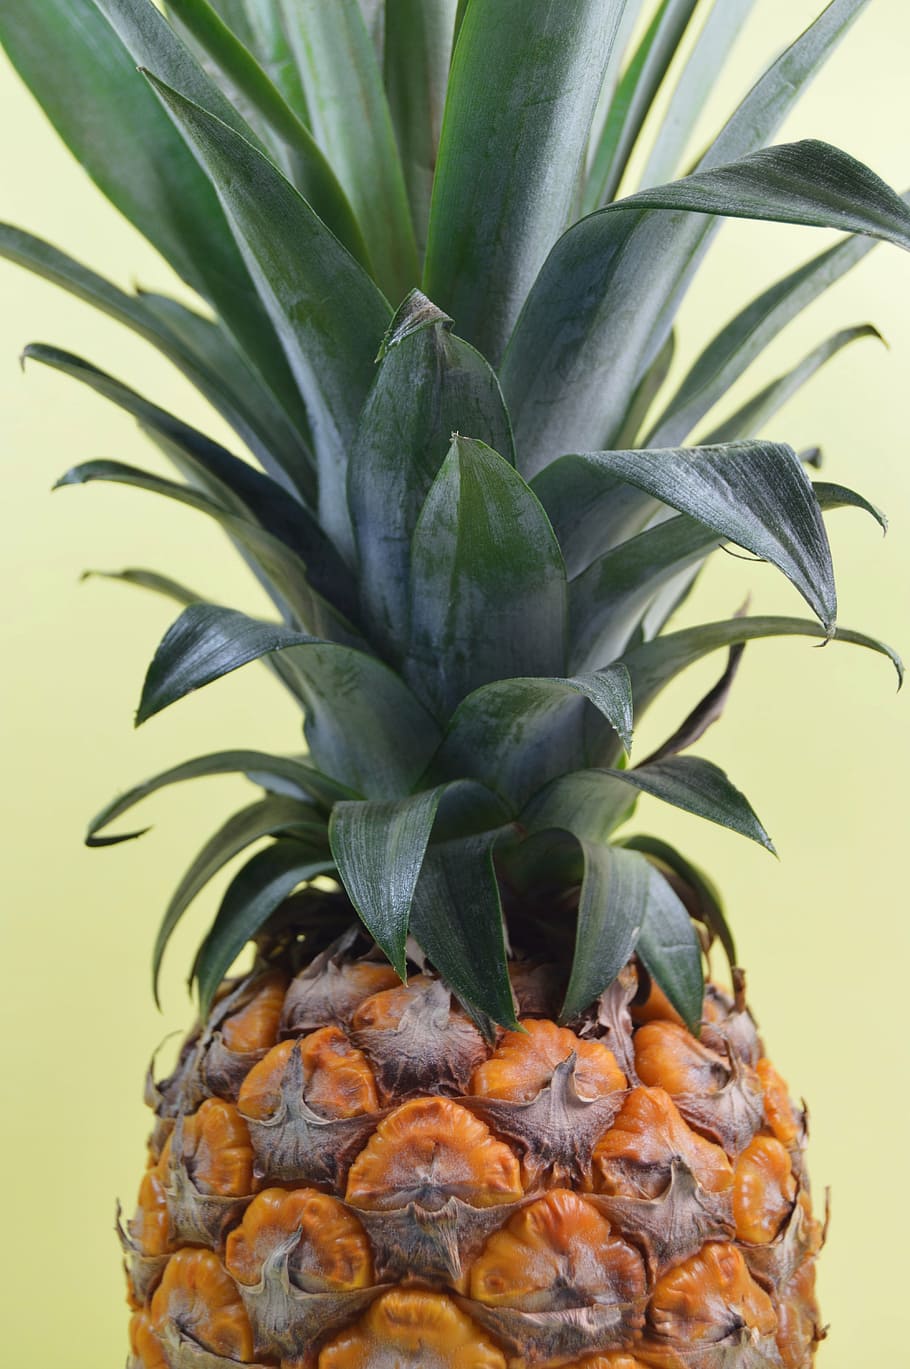 closed-up photo, pineapple fruit, pineapple, dessert, appetizer, fruit, juice, crop, tropical climate, leaf